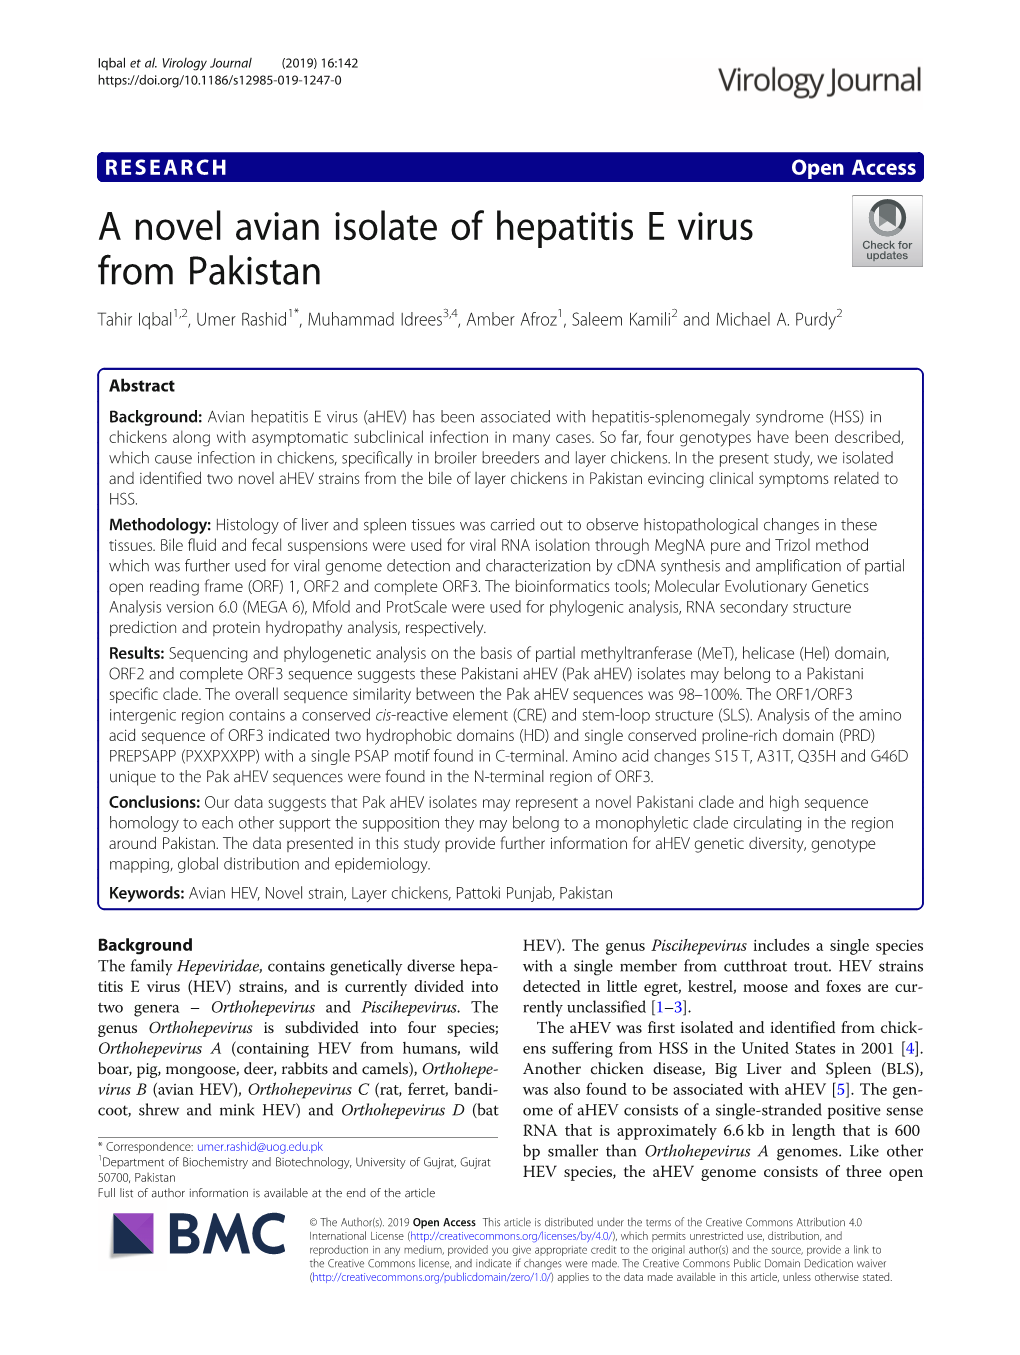 A Novel Avian Isolate of Hepatitis E Virus from Pakistan Tahir Iqbal1,2, Umer Rashid1*, Muhammad Idrees3,4, Amber Afroz1, Saleem Kamili2 and Michael A